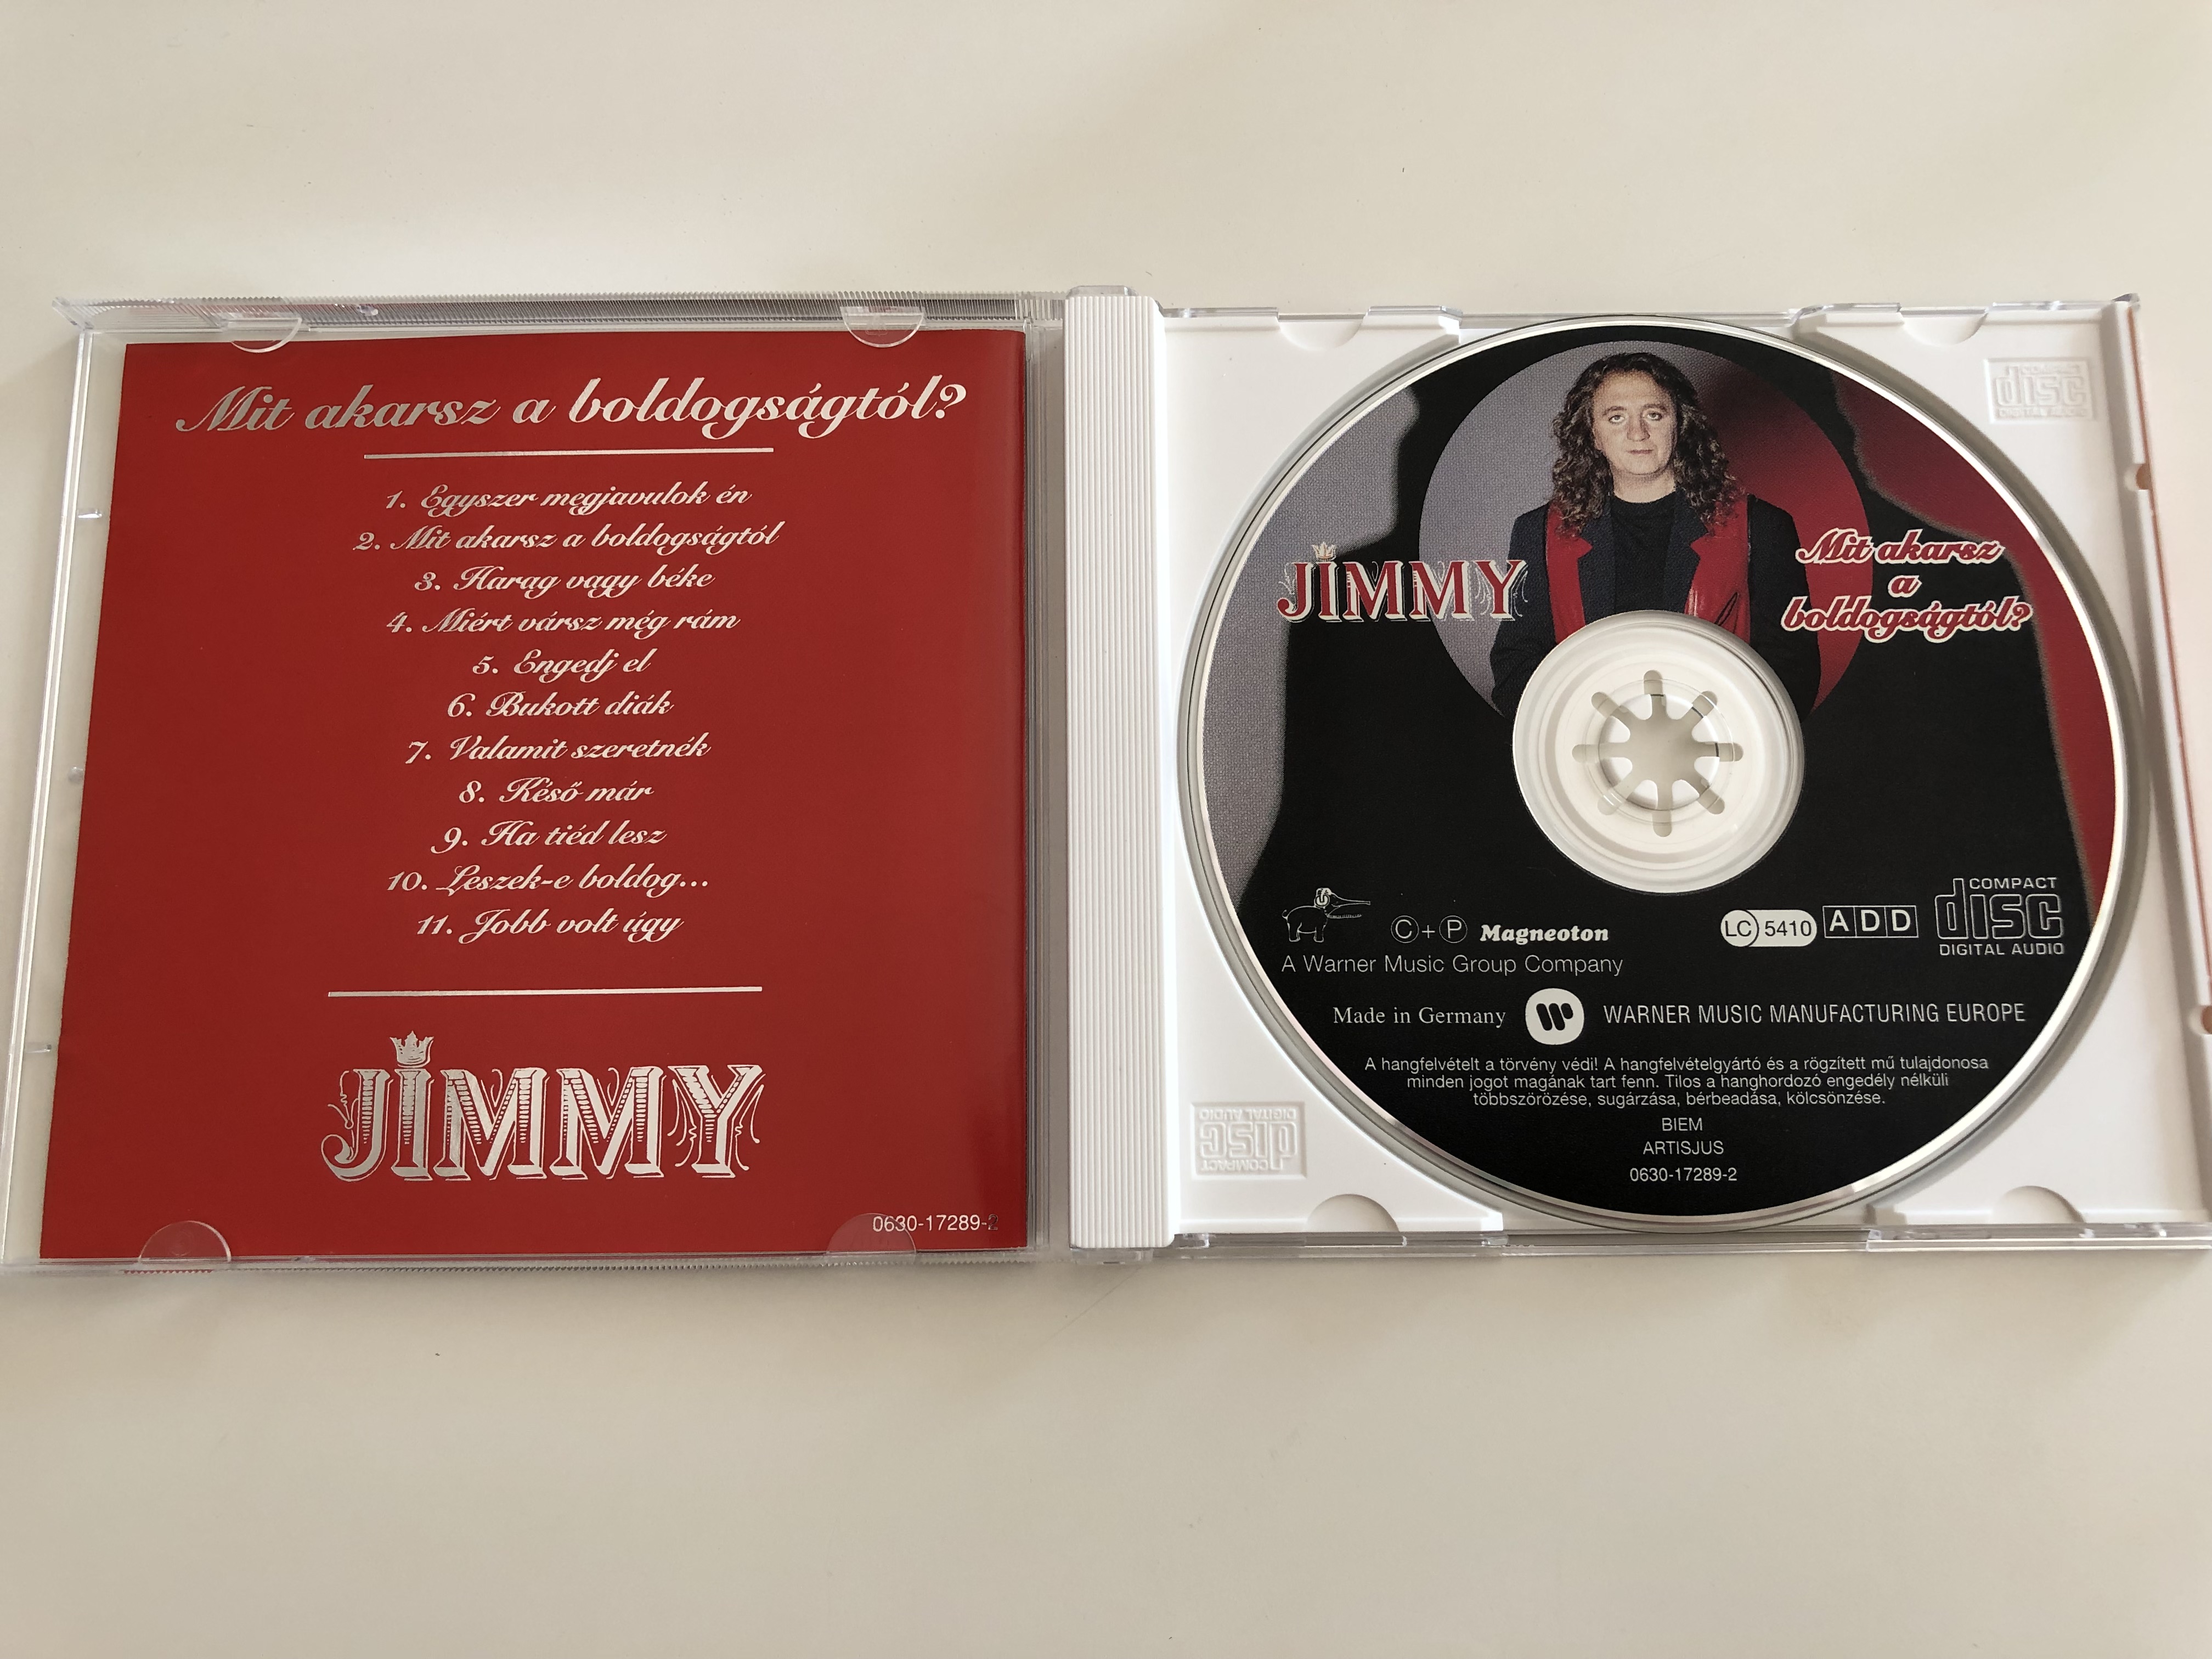 jimmy-mit-akarsz-a-boldogs-gt-l-engedj-el-bukott-di-k-ha-ti-d-lesz-jobb-volt-gy-magneoton-audio-cd-1996-3-.jpg